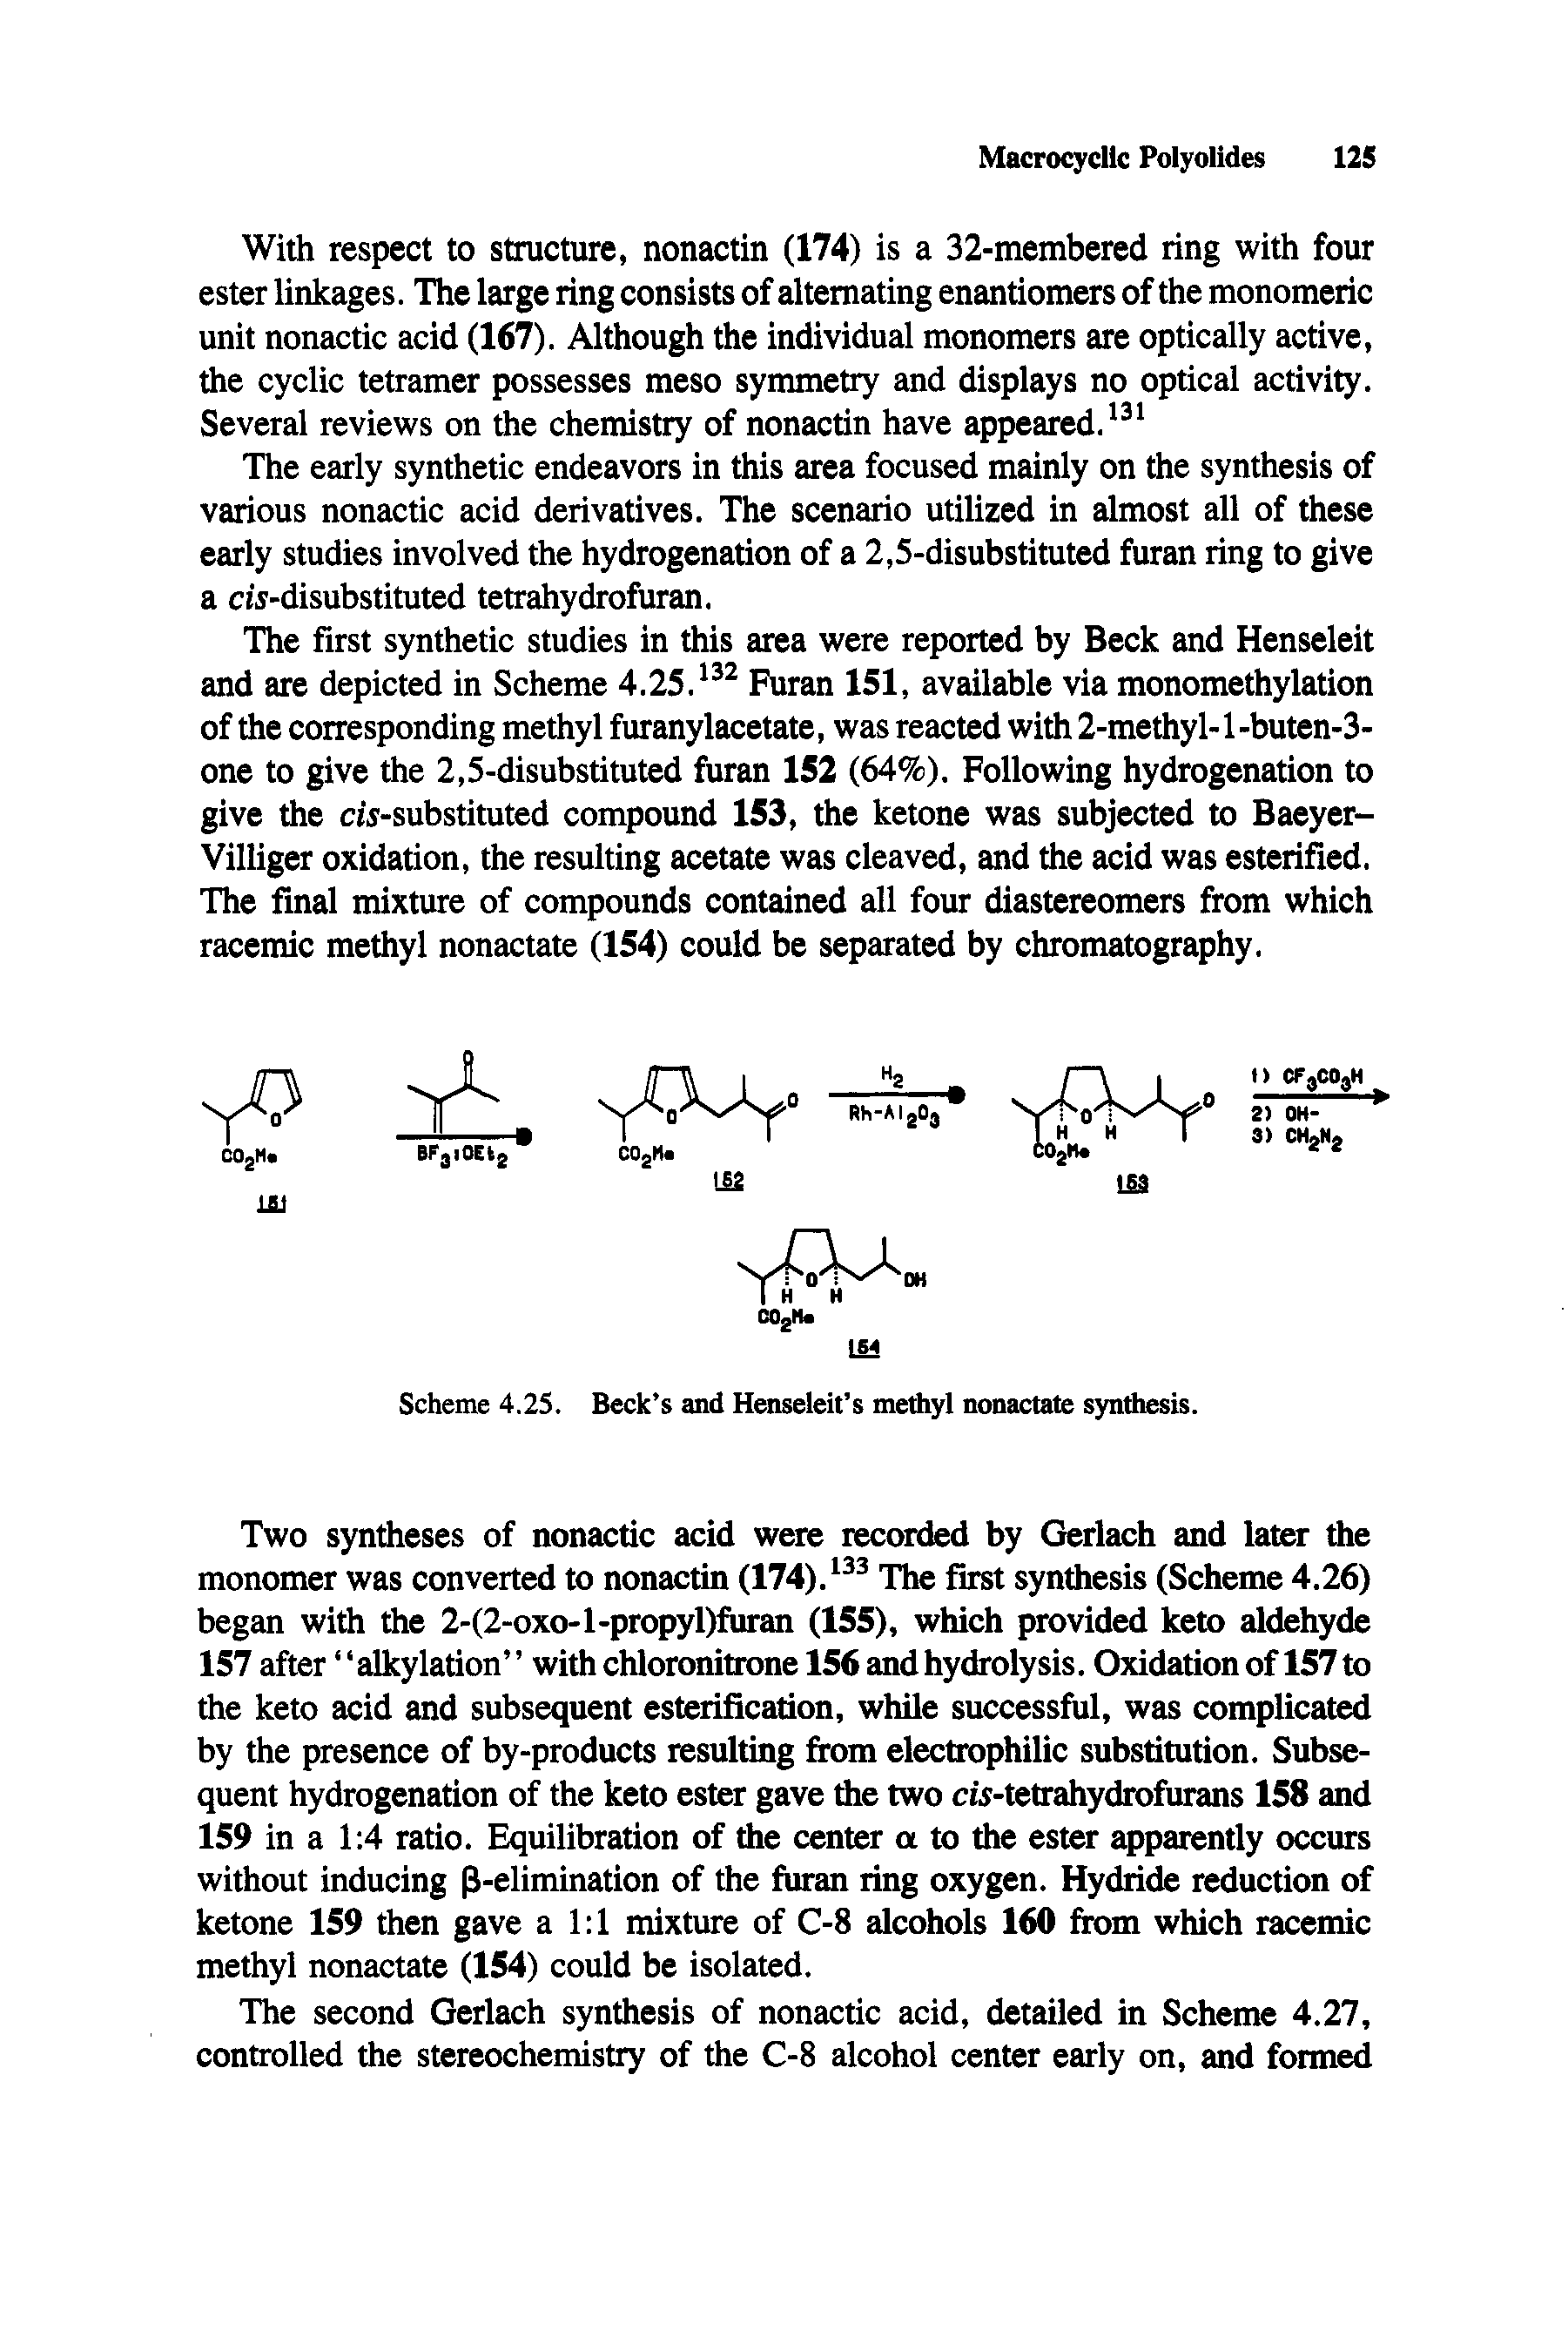 Scheme 4.25. Beck s and Henseleit s methyl nonactate synthesis.